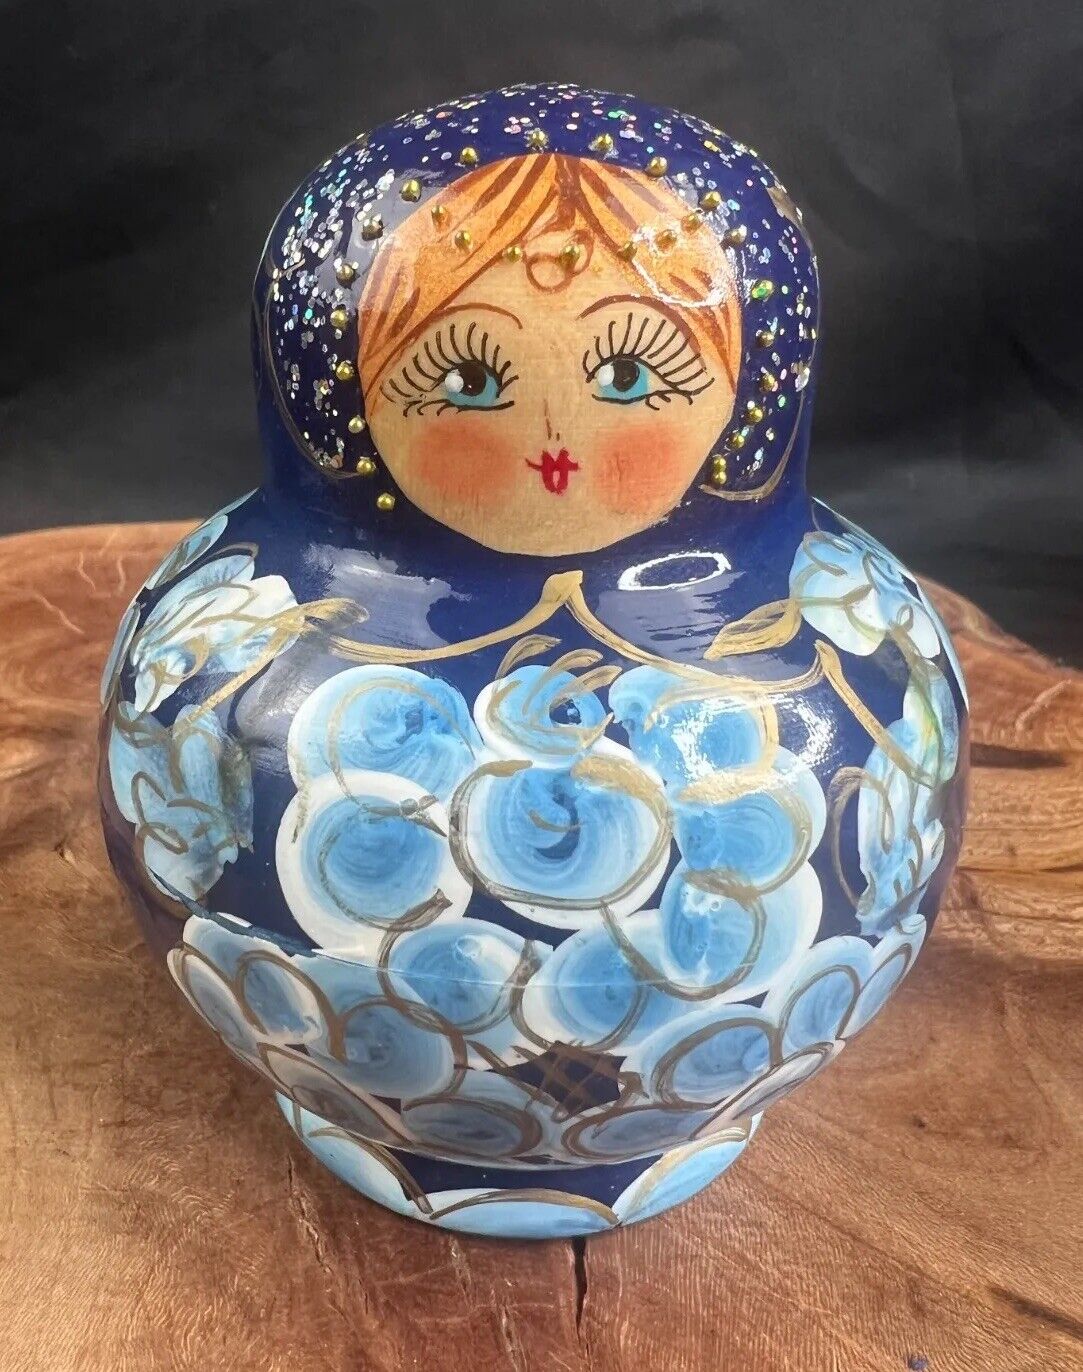 Vintage Russian Matryoshka Nesting Dolls 6 Pieces Light Blue Handmade